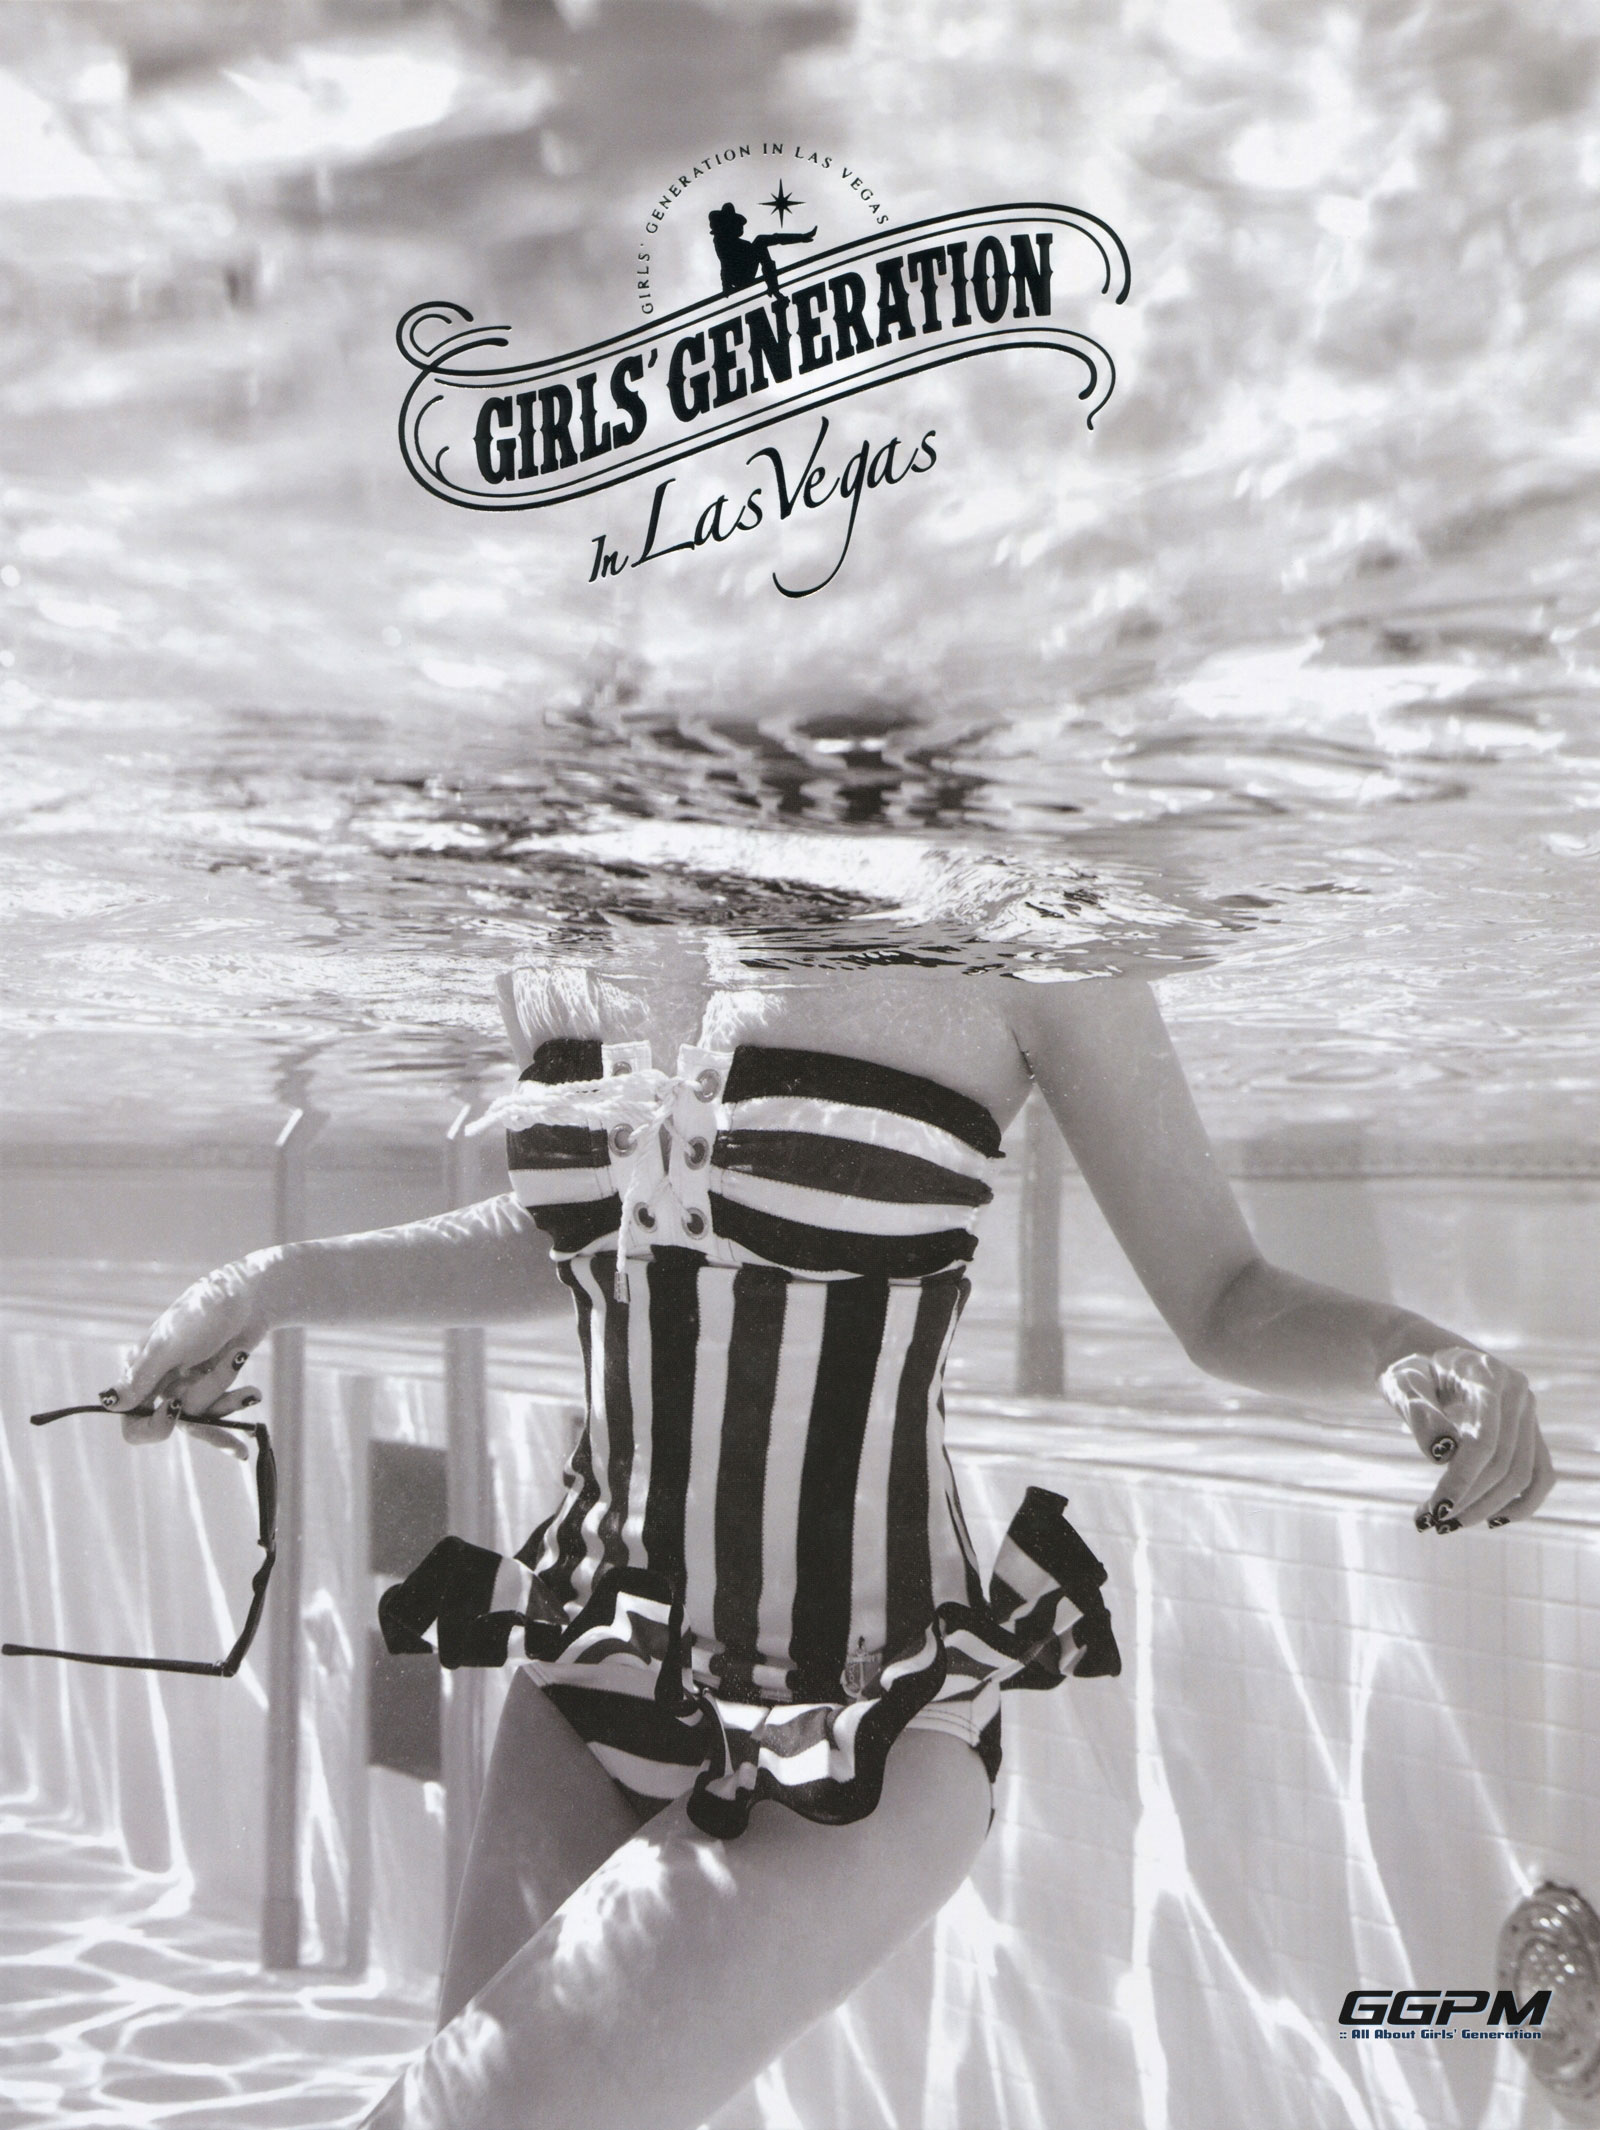 Girls Generation SNSD in Las Vegas photobook